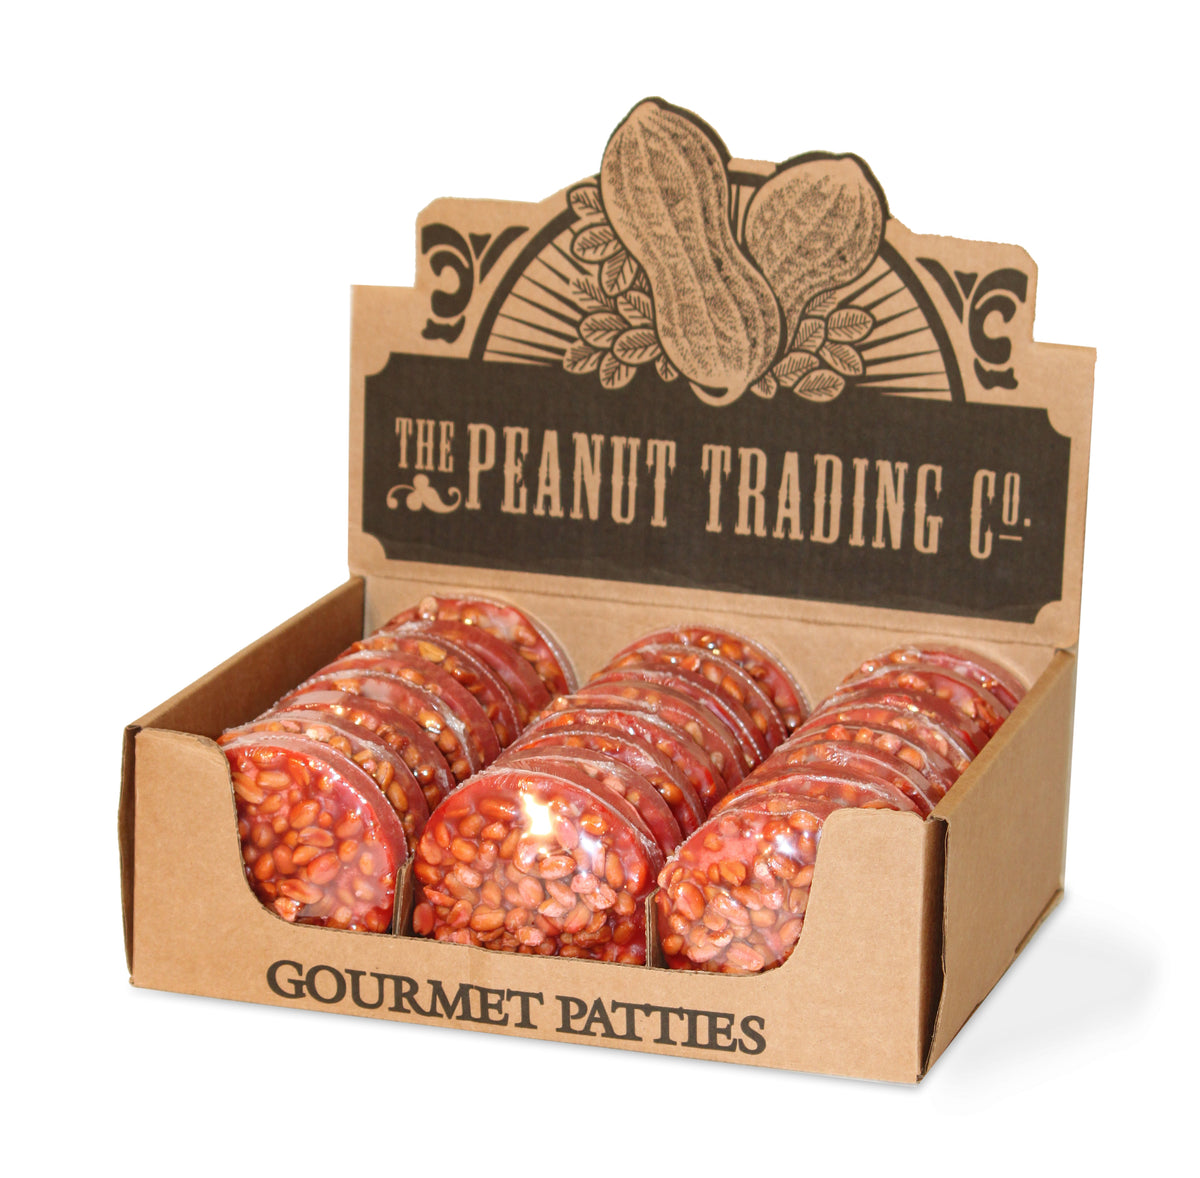 Peanut Trading Company - Peanut Pattie Counter Display - Giant